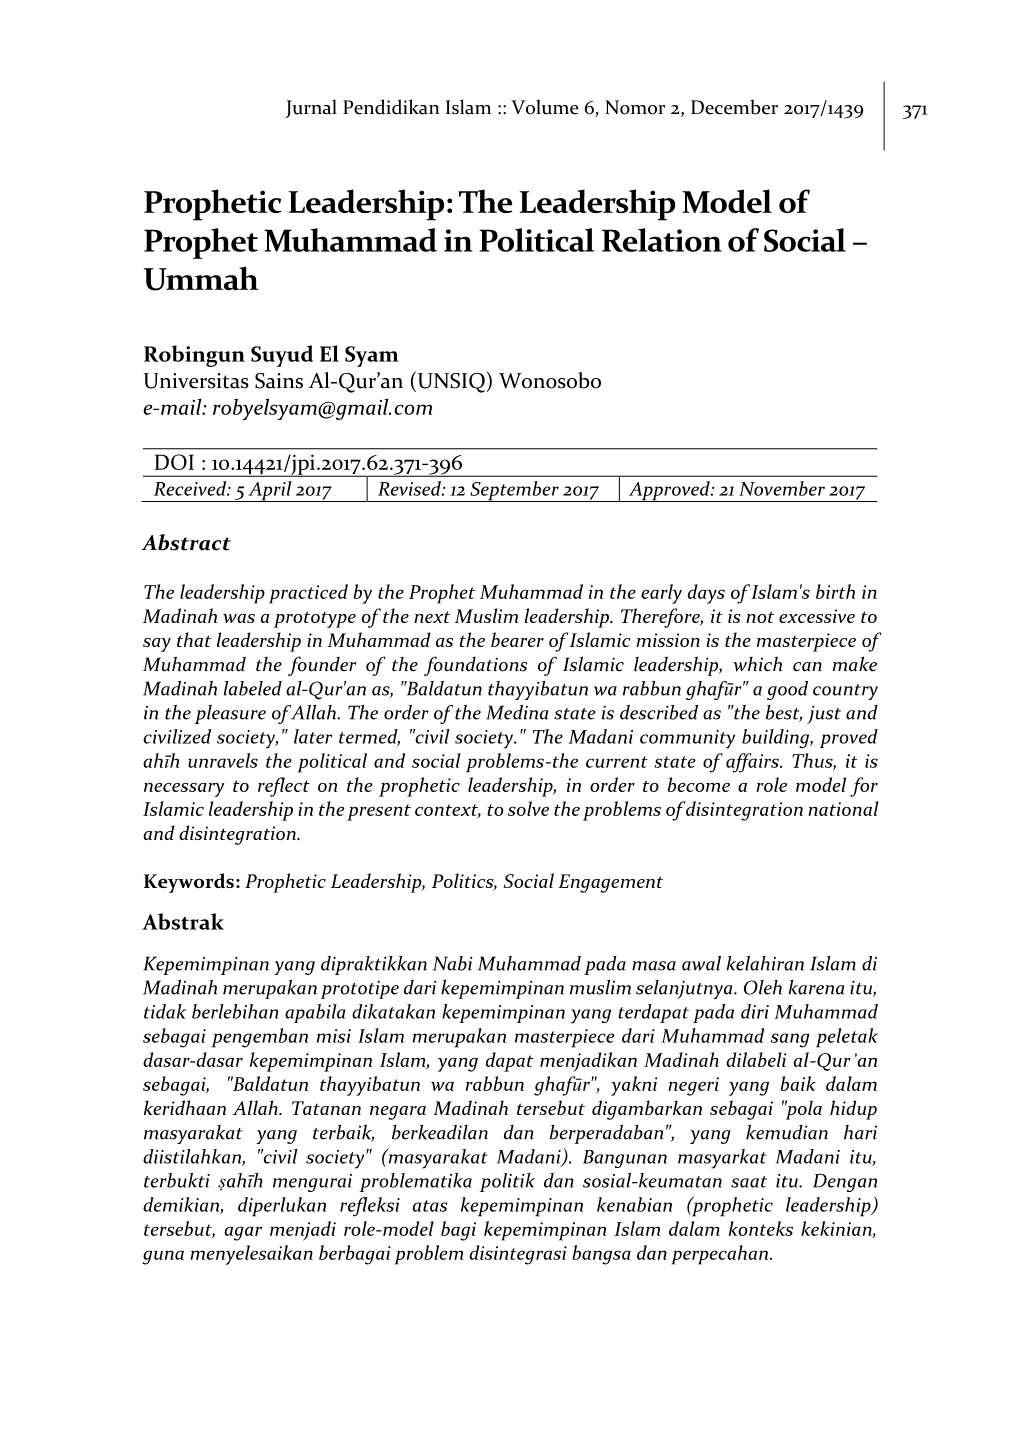 The Leadership Model of Prophet Muhammad in Political Relation of Social – Ummah